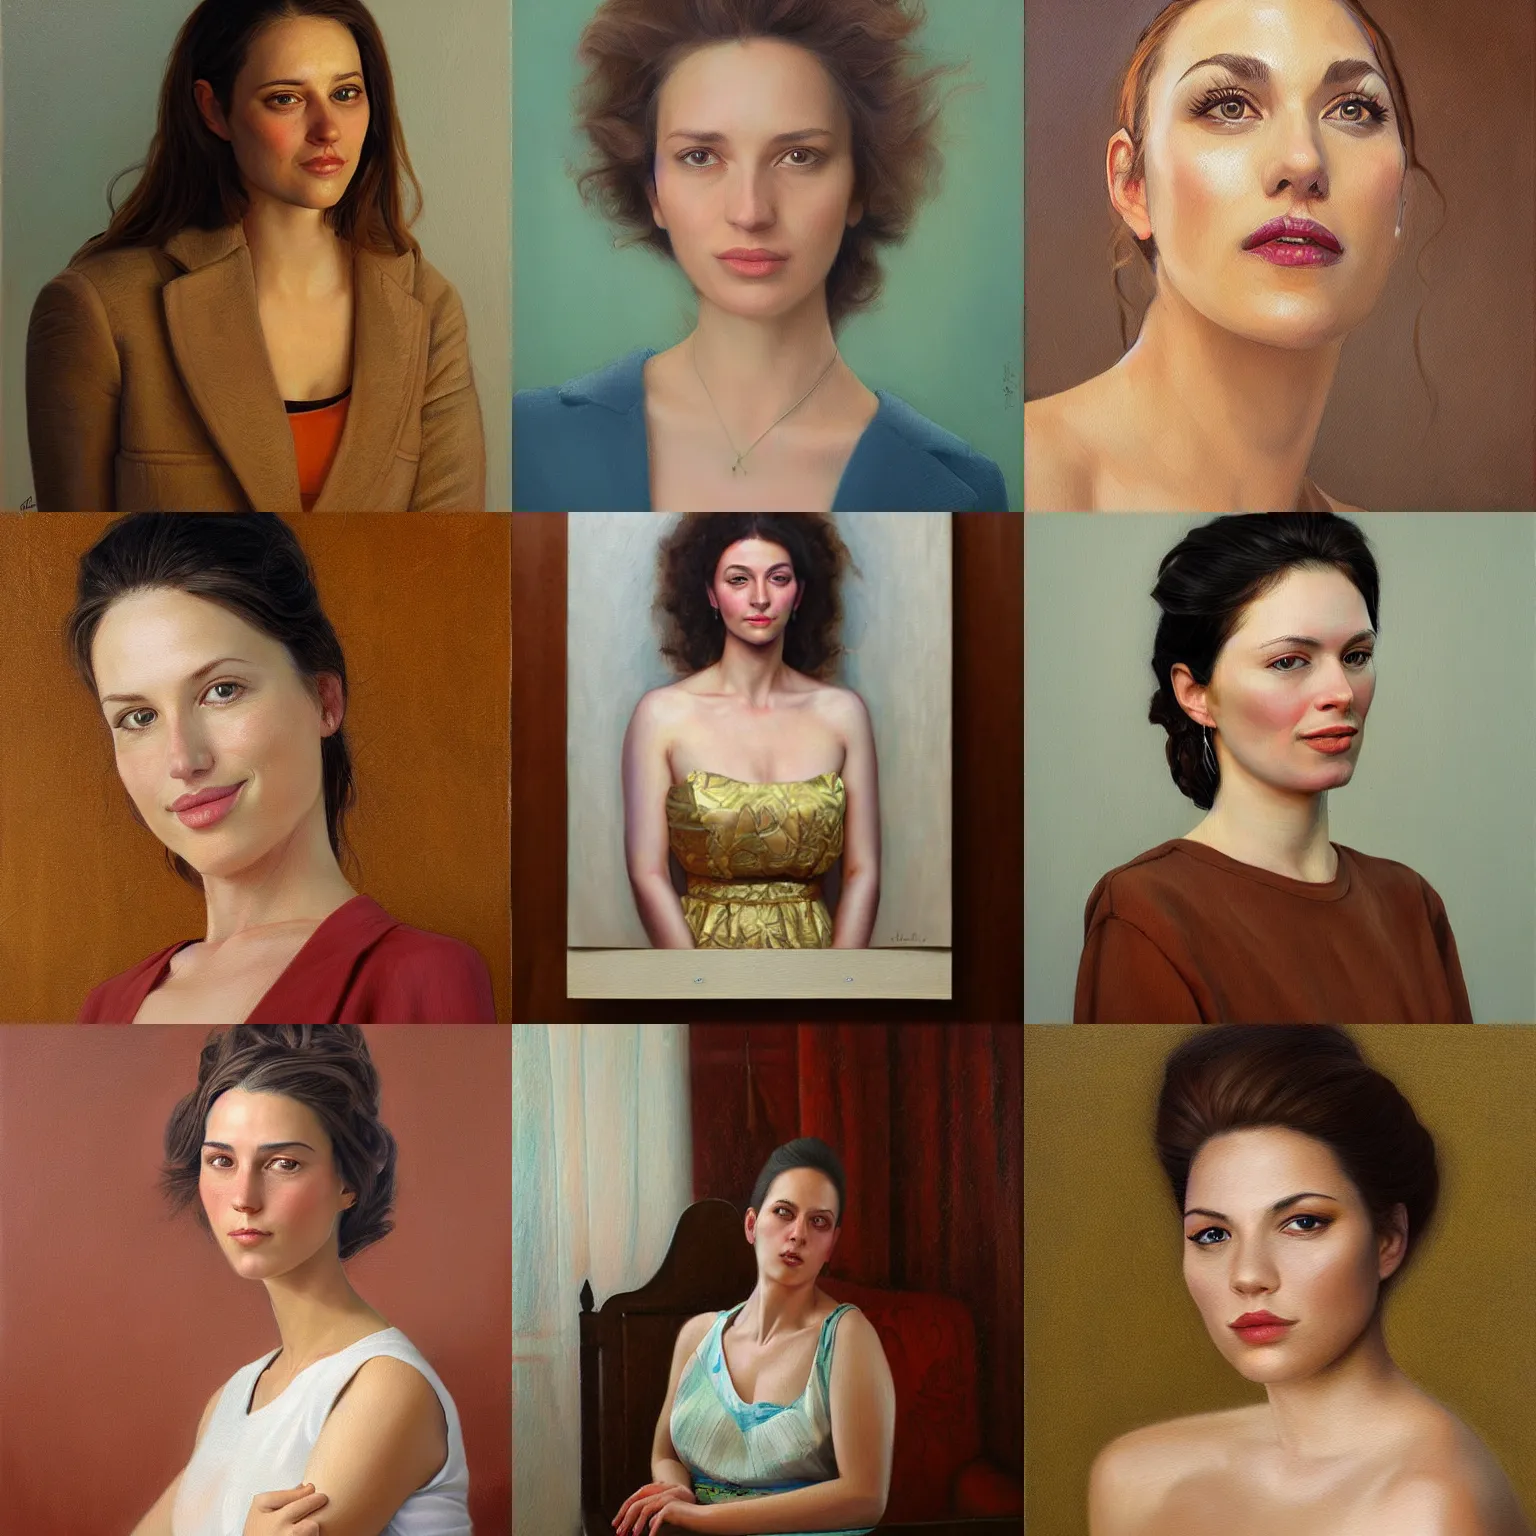 Prompt: a portrait painting of Jena Friedman by arsen kurbanov